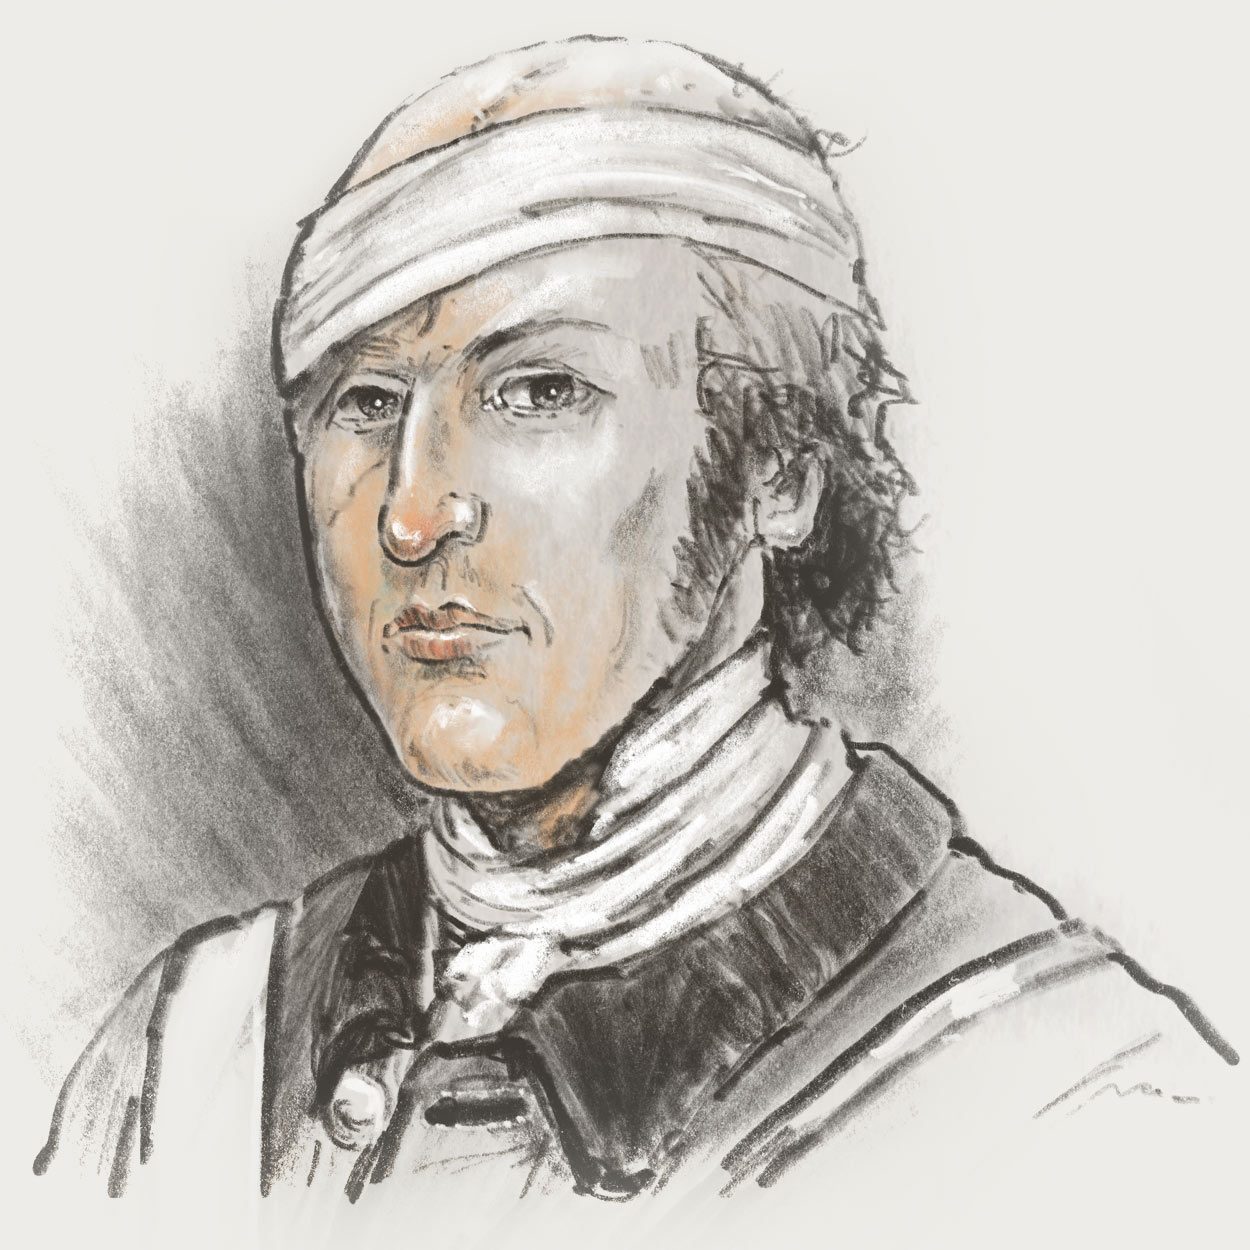 Drawn portrait of Thomas Brown